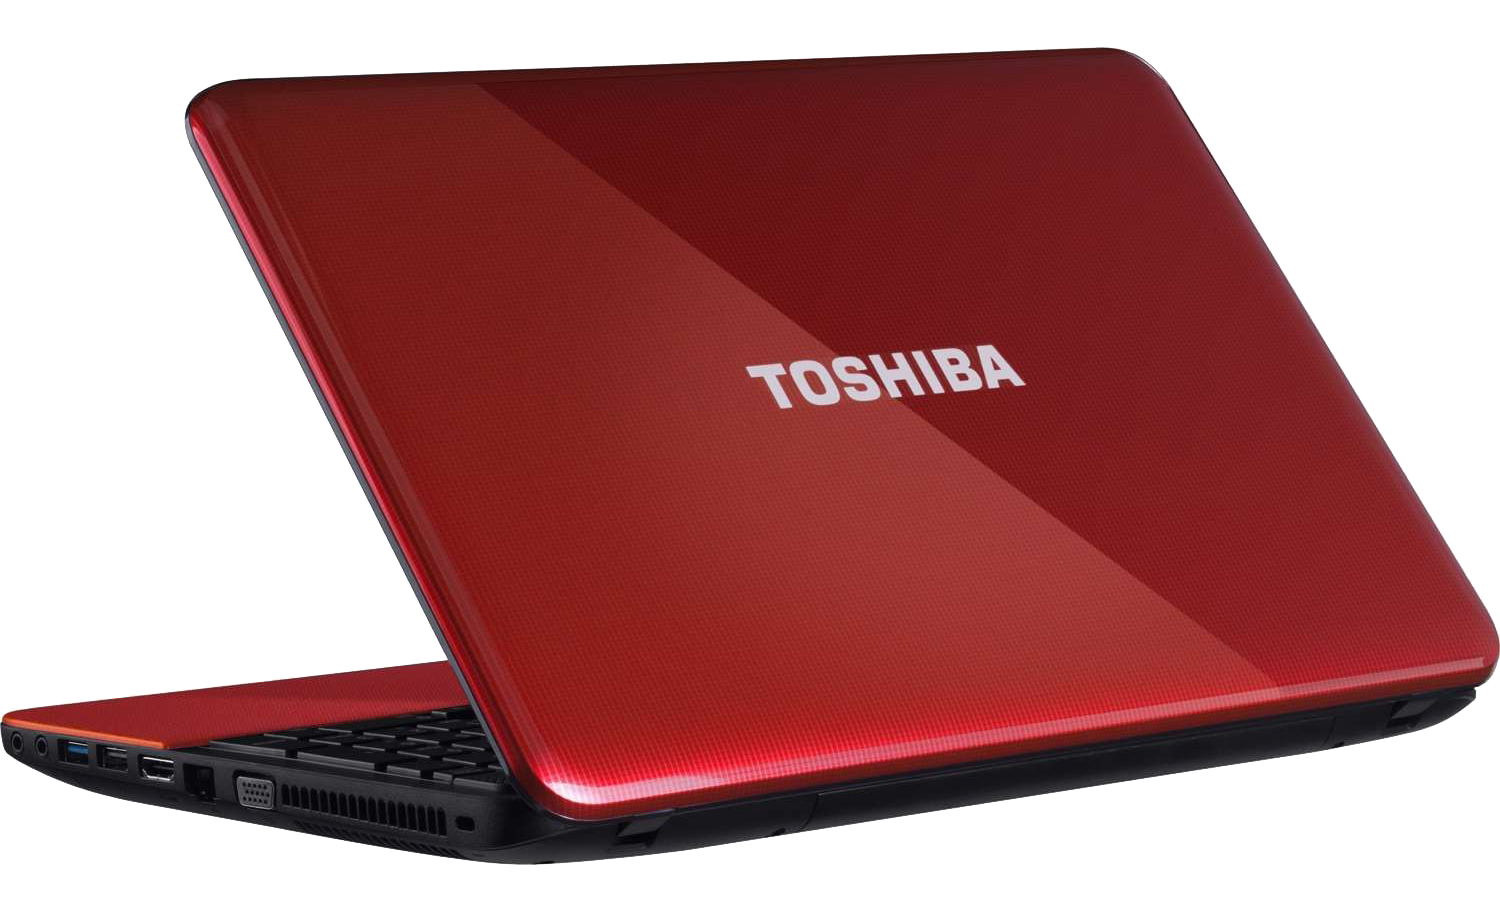 Toshiba Laptop PNG Image